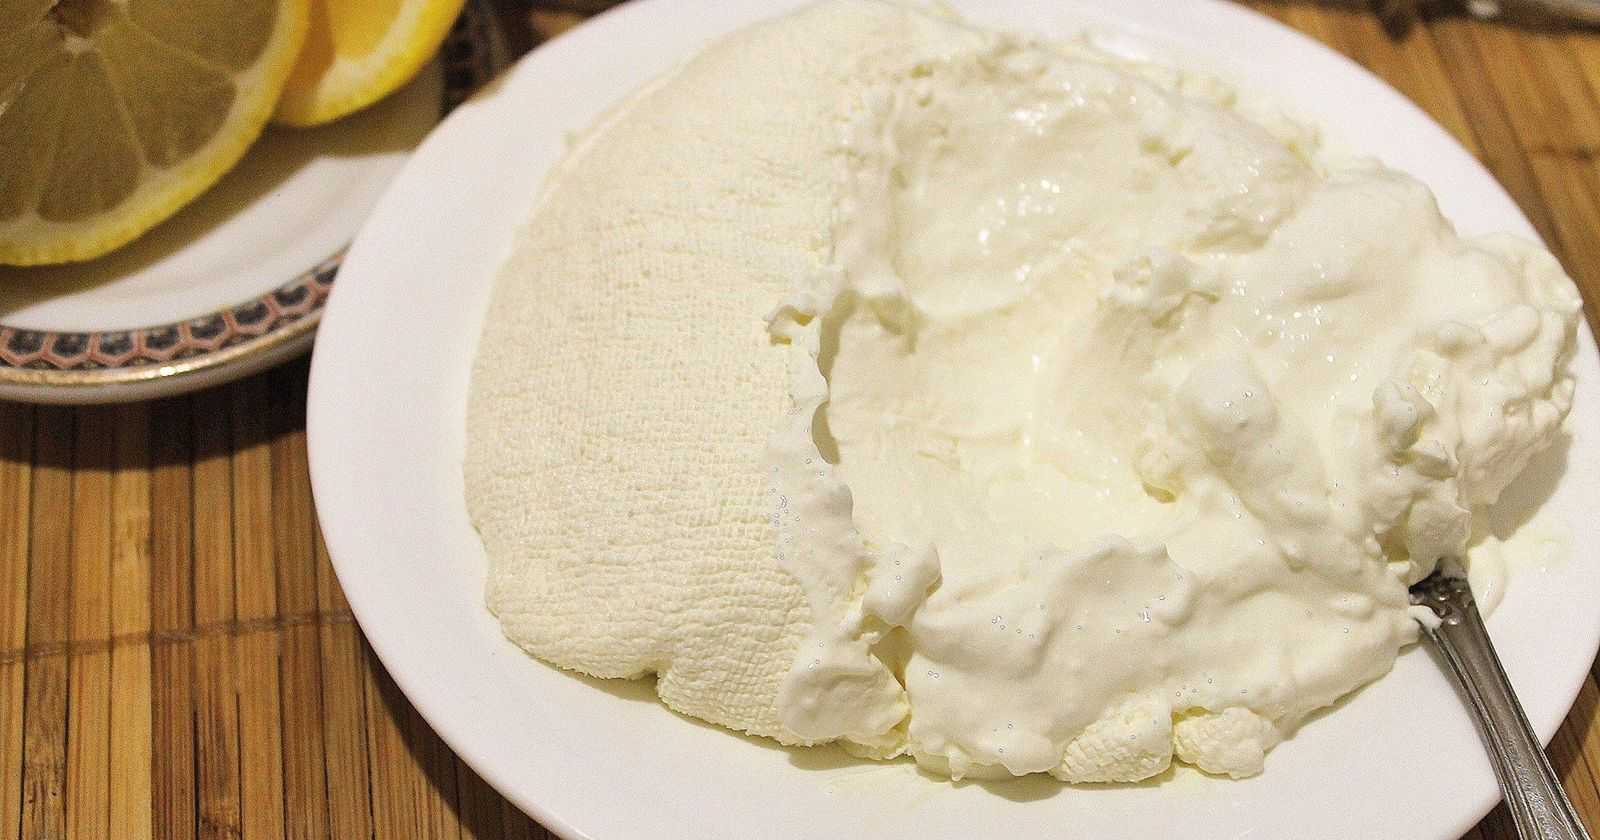 Сыр маскарпоне – рецепт крема для торта в домашних условиях